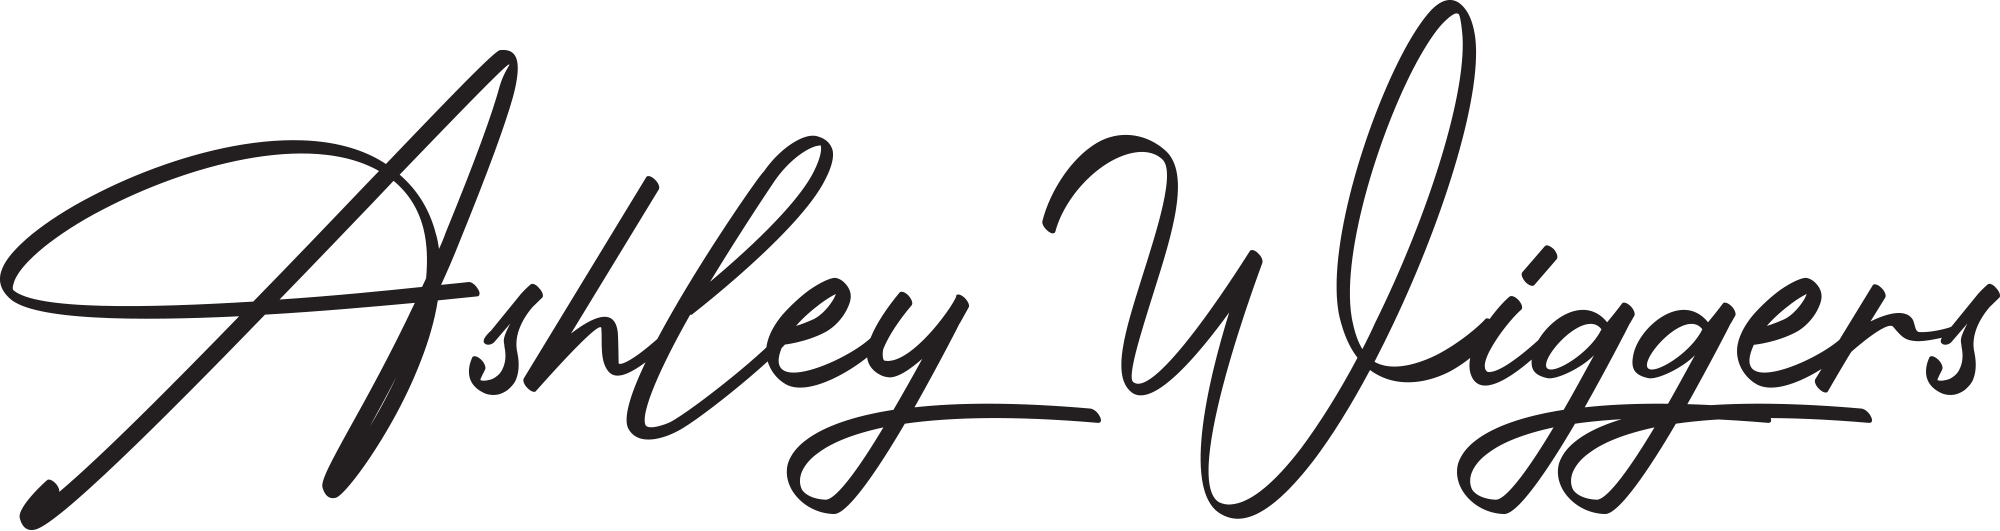 ashley wiggers signature